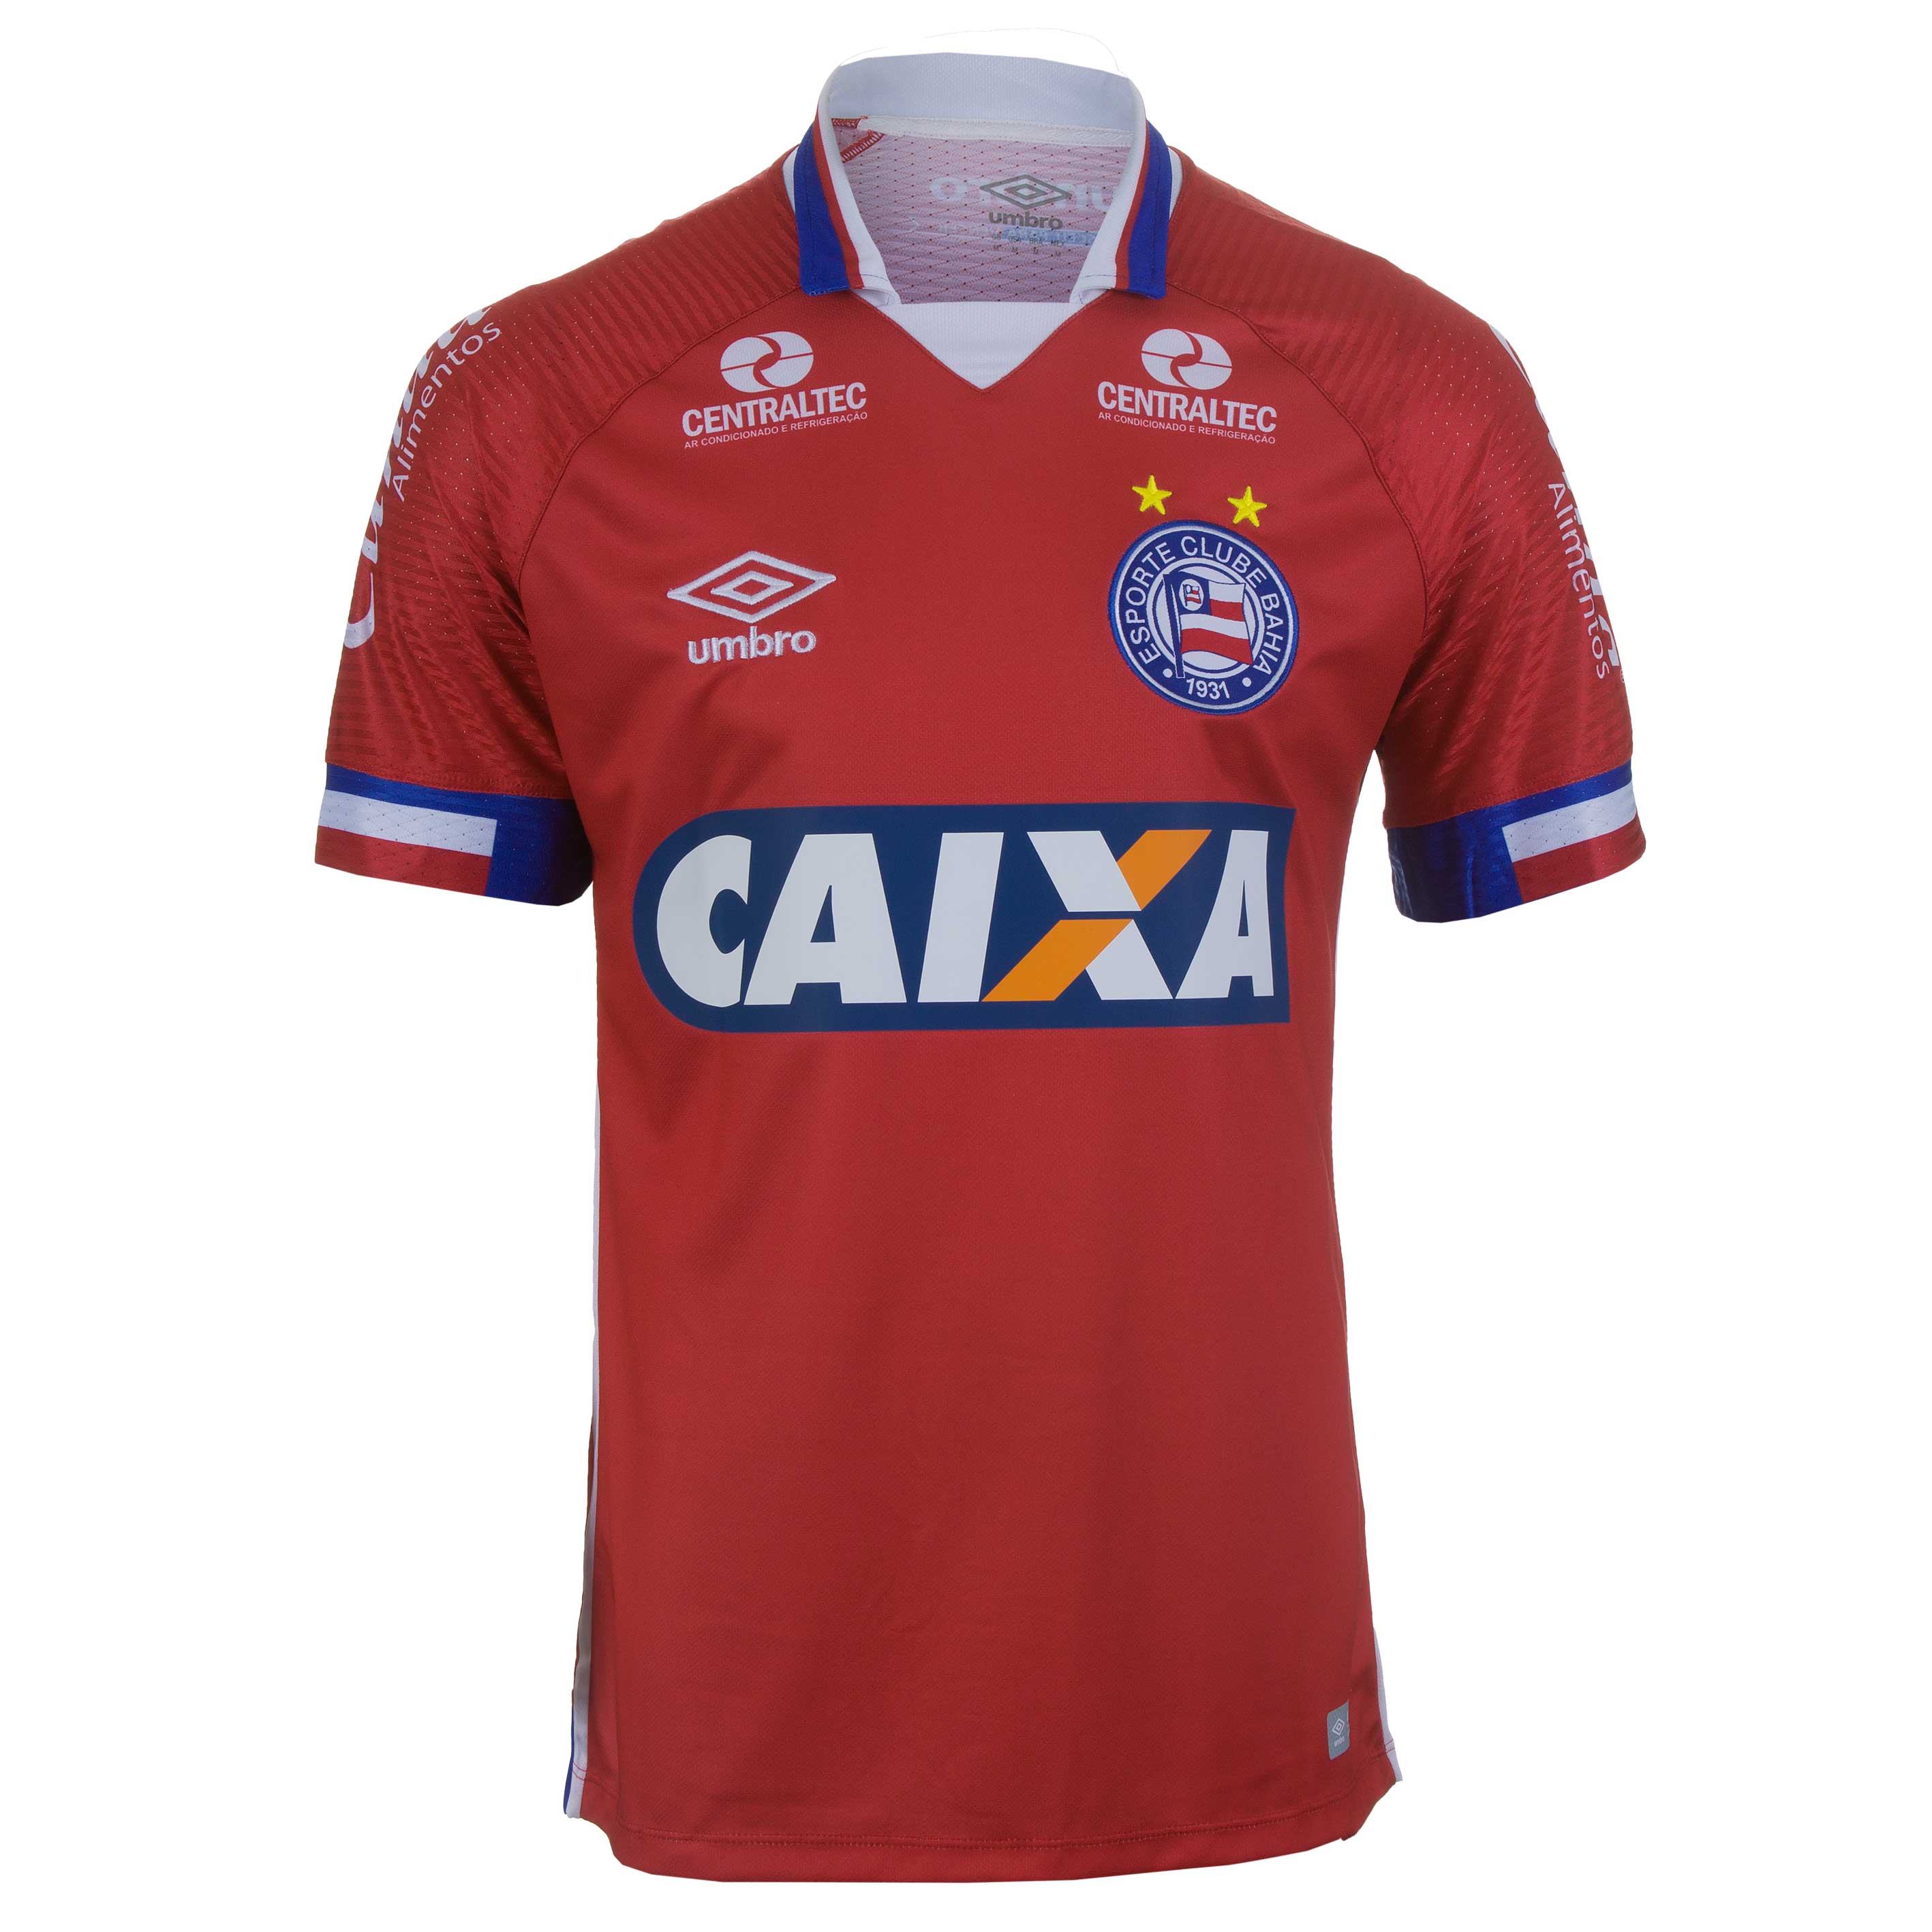 Camiseta Masc. Umbro Bahia Of. 3 - Branco/Vermelho